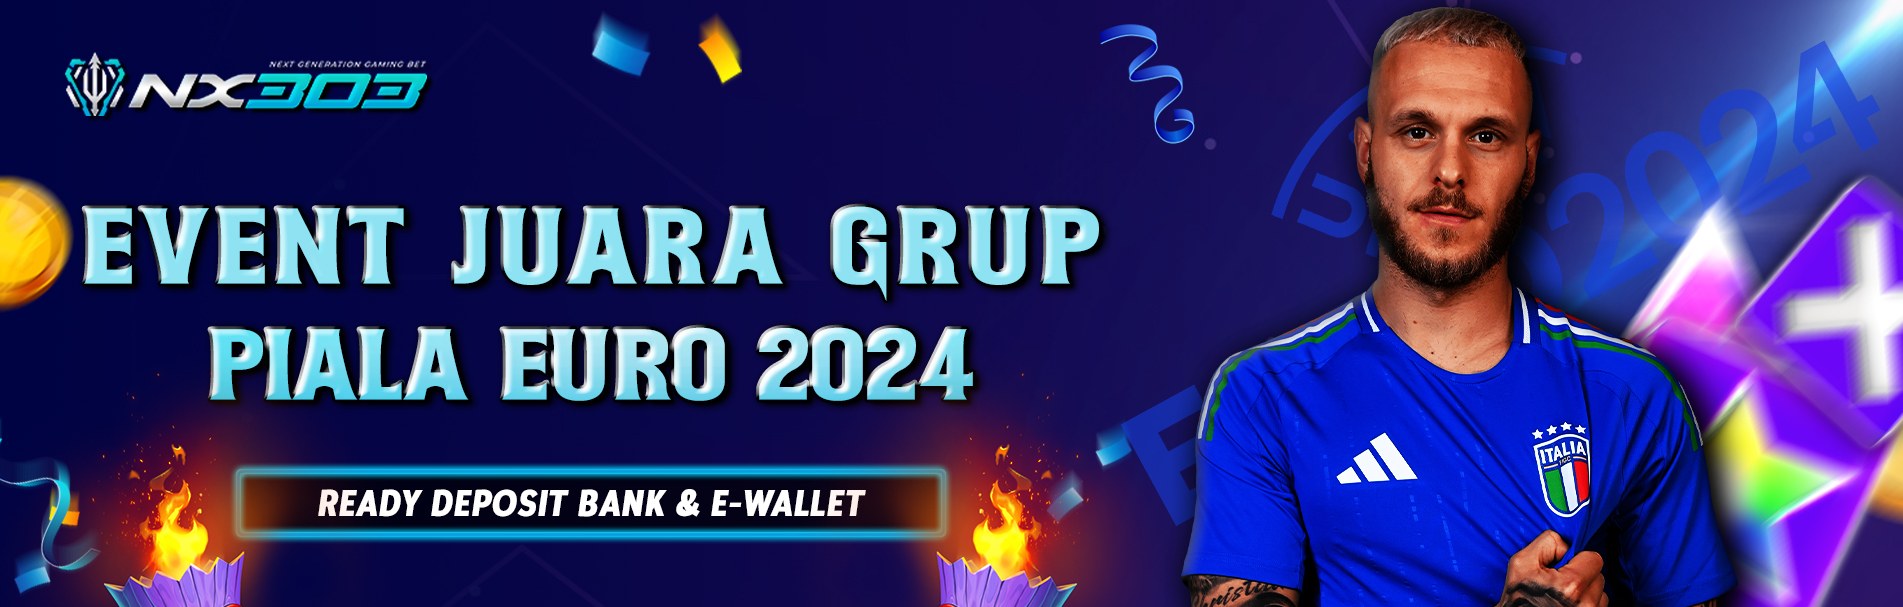 EVENT TEBAK JUARA GROUP PIALA EURO 2024